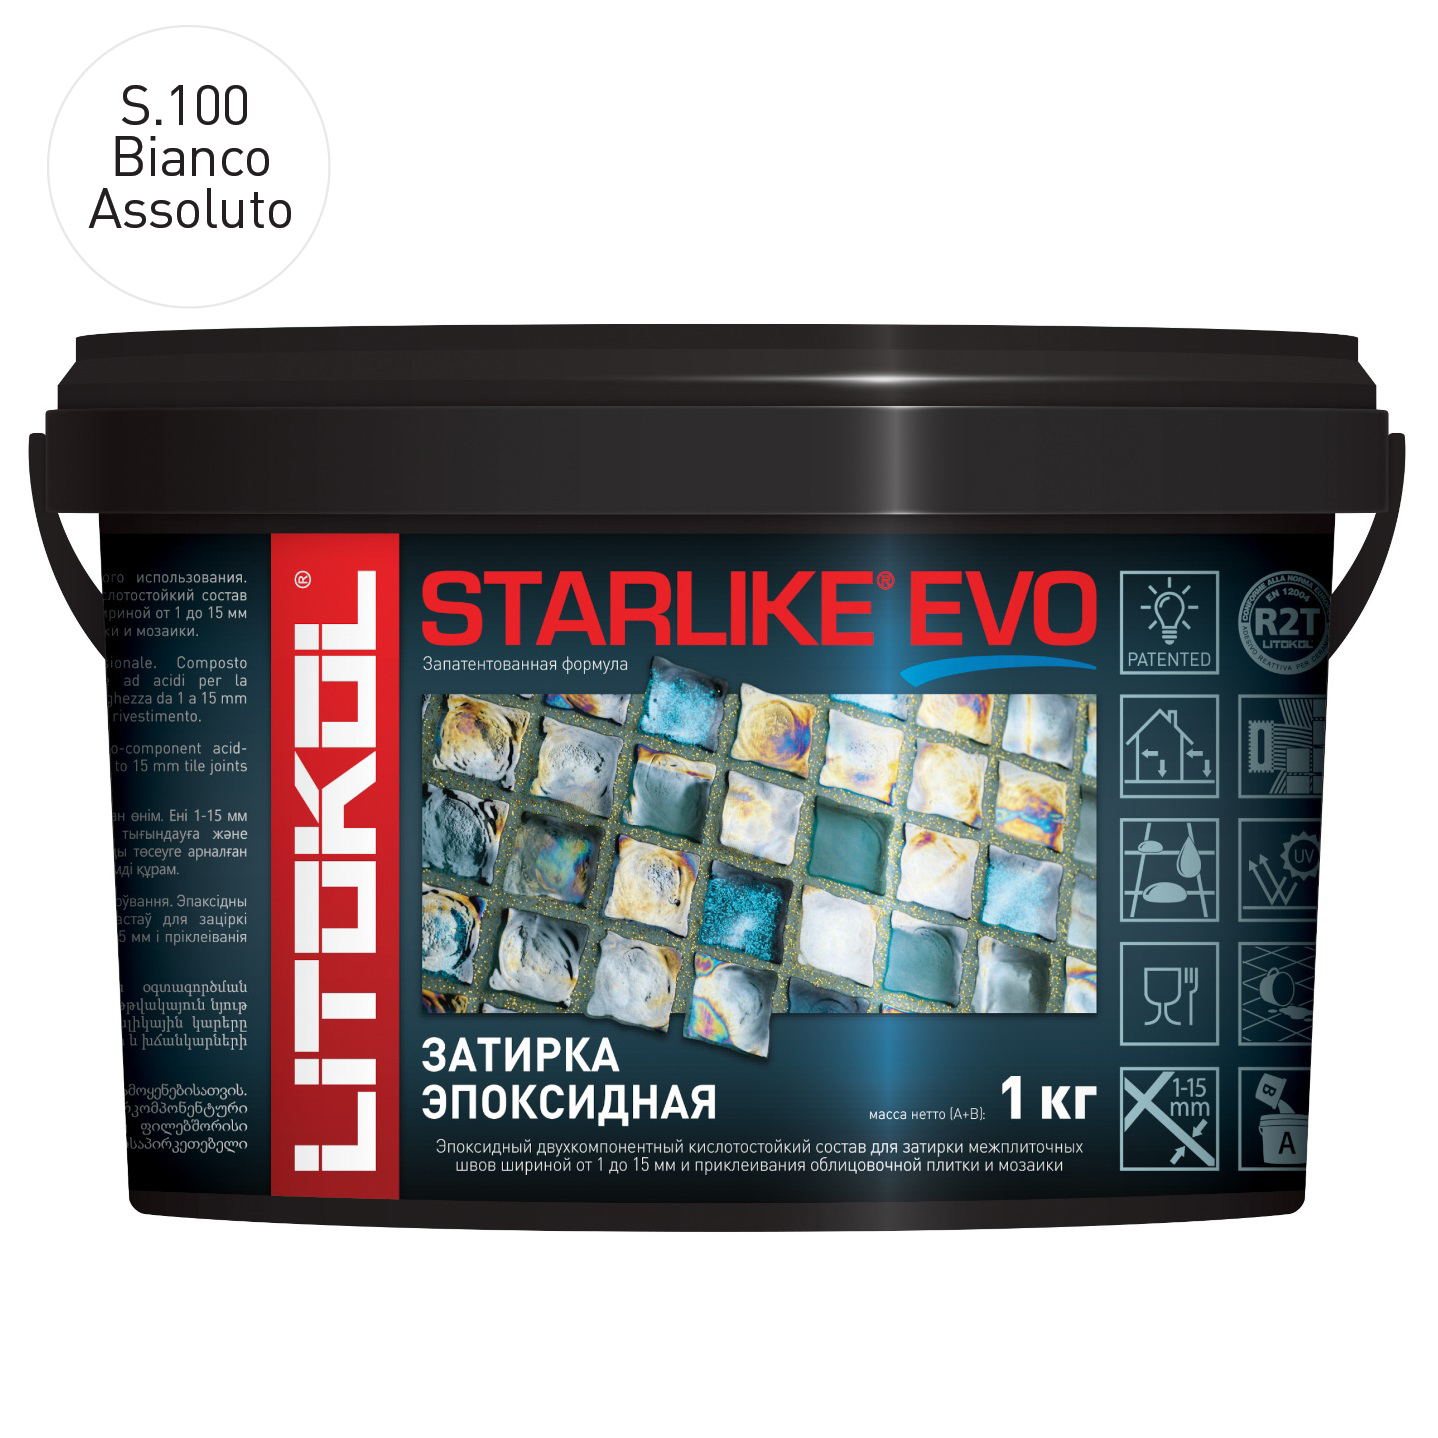 Затирка эпоксидная Litokol Starlike Evo S.100 Bianco Assoluto (1 кг.)